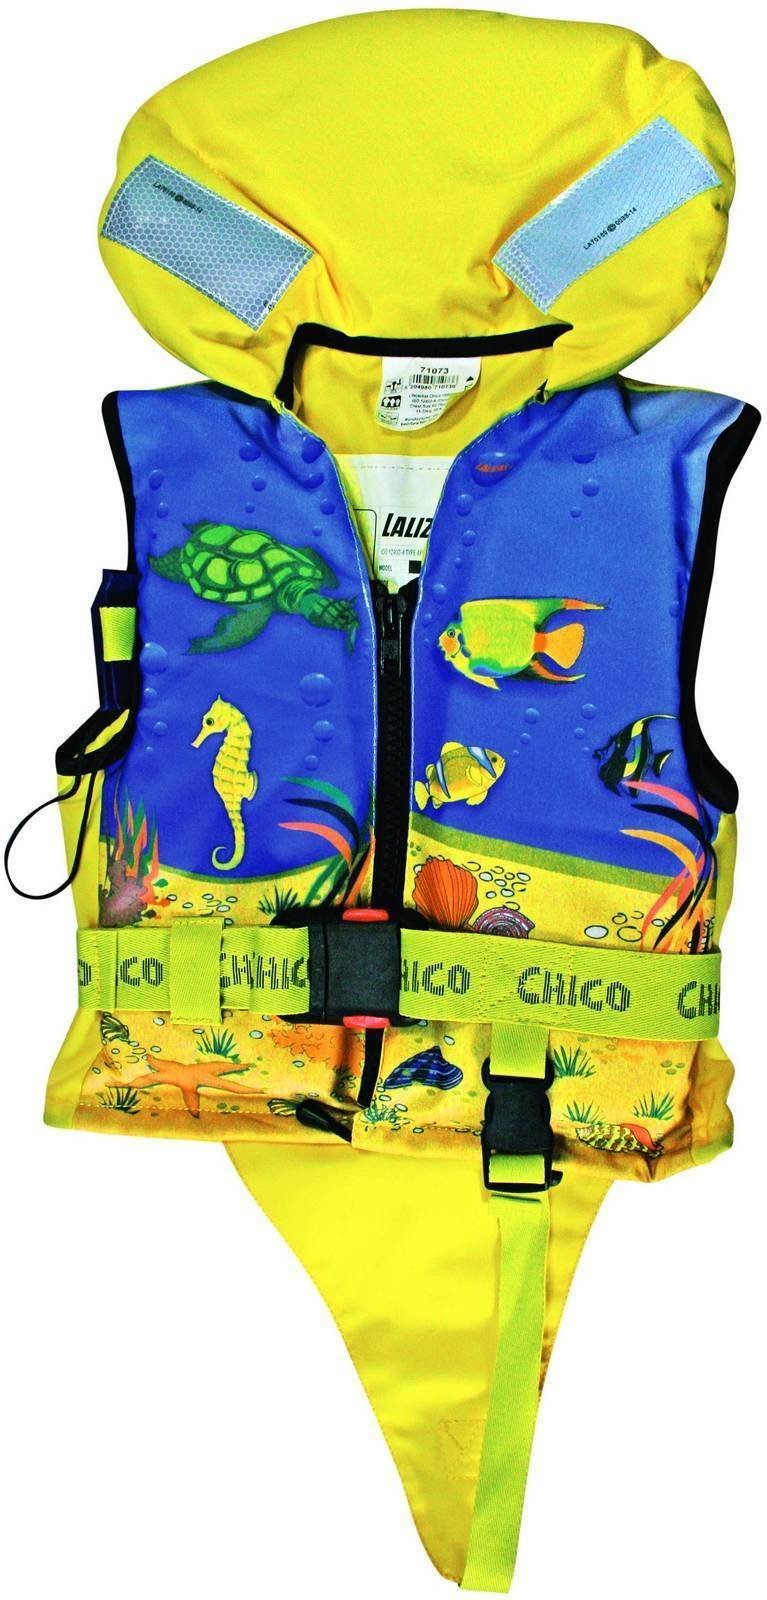 Záchranná vesta Lalizas Chico Lifejacket 10-20kg